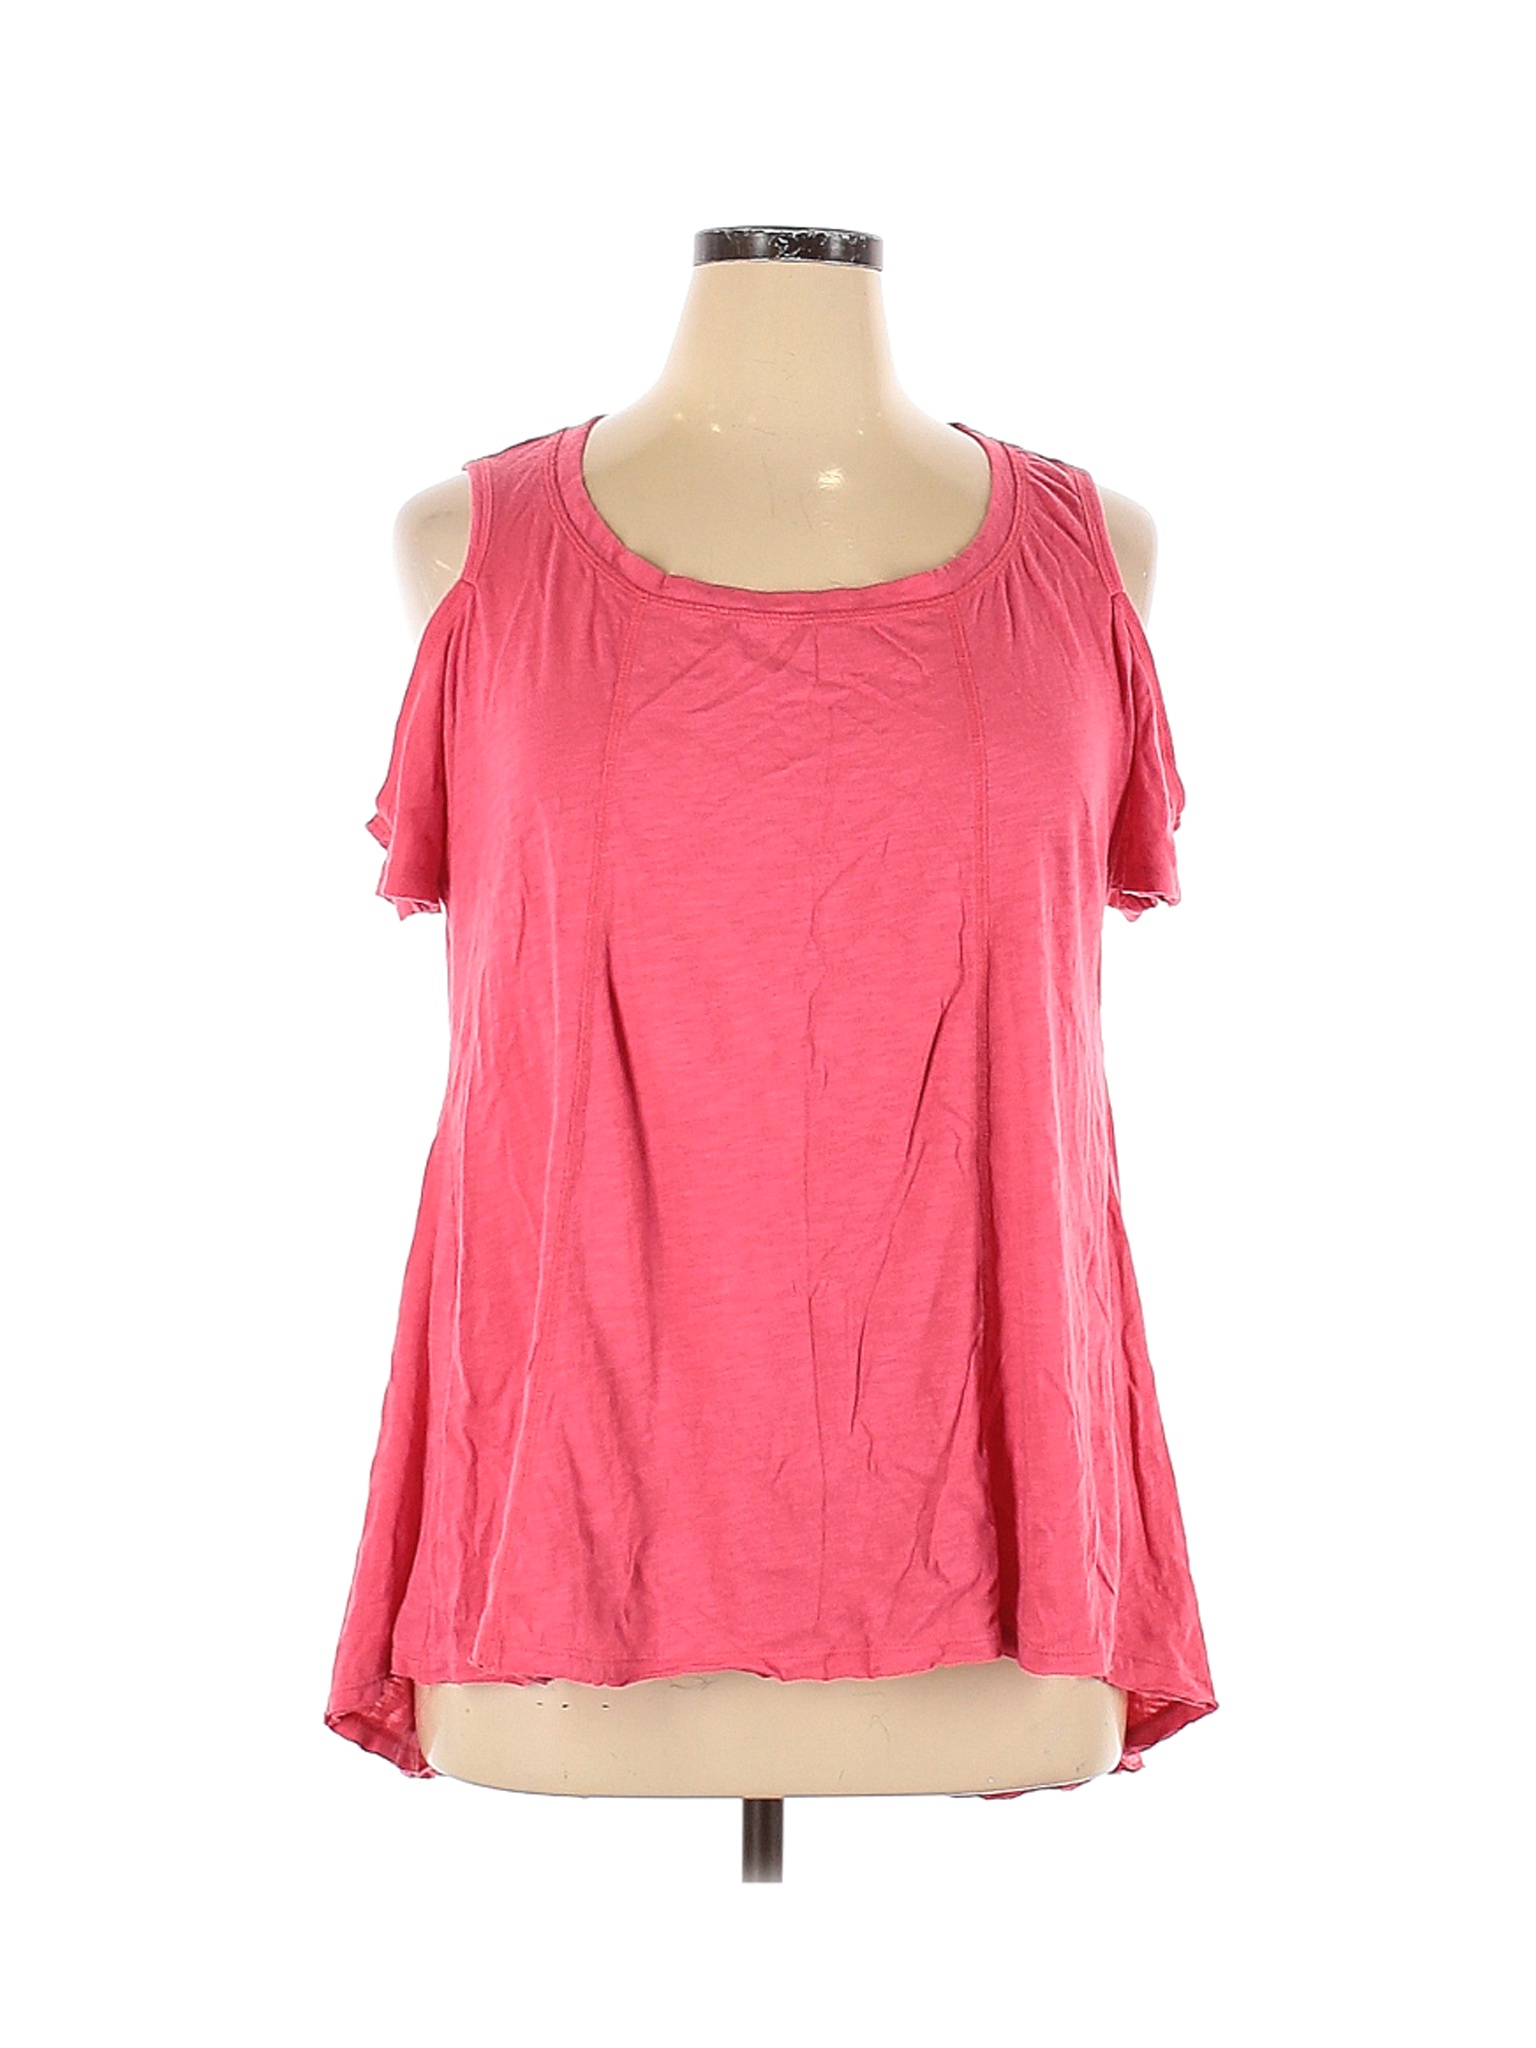 Torrid Women Pink Short Sleeve T-Shirt 1X Plus | eBay